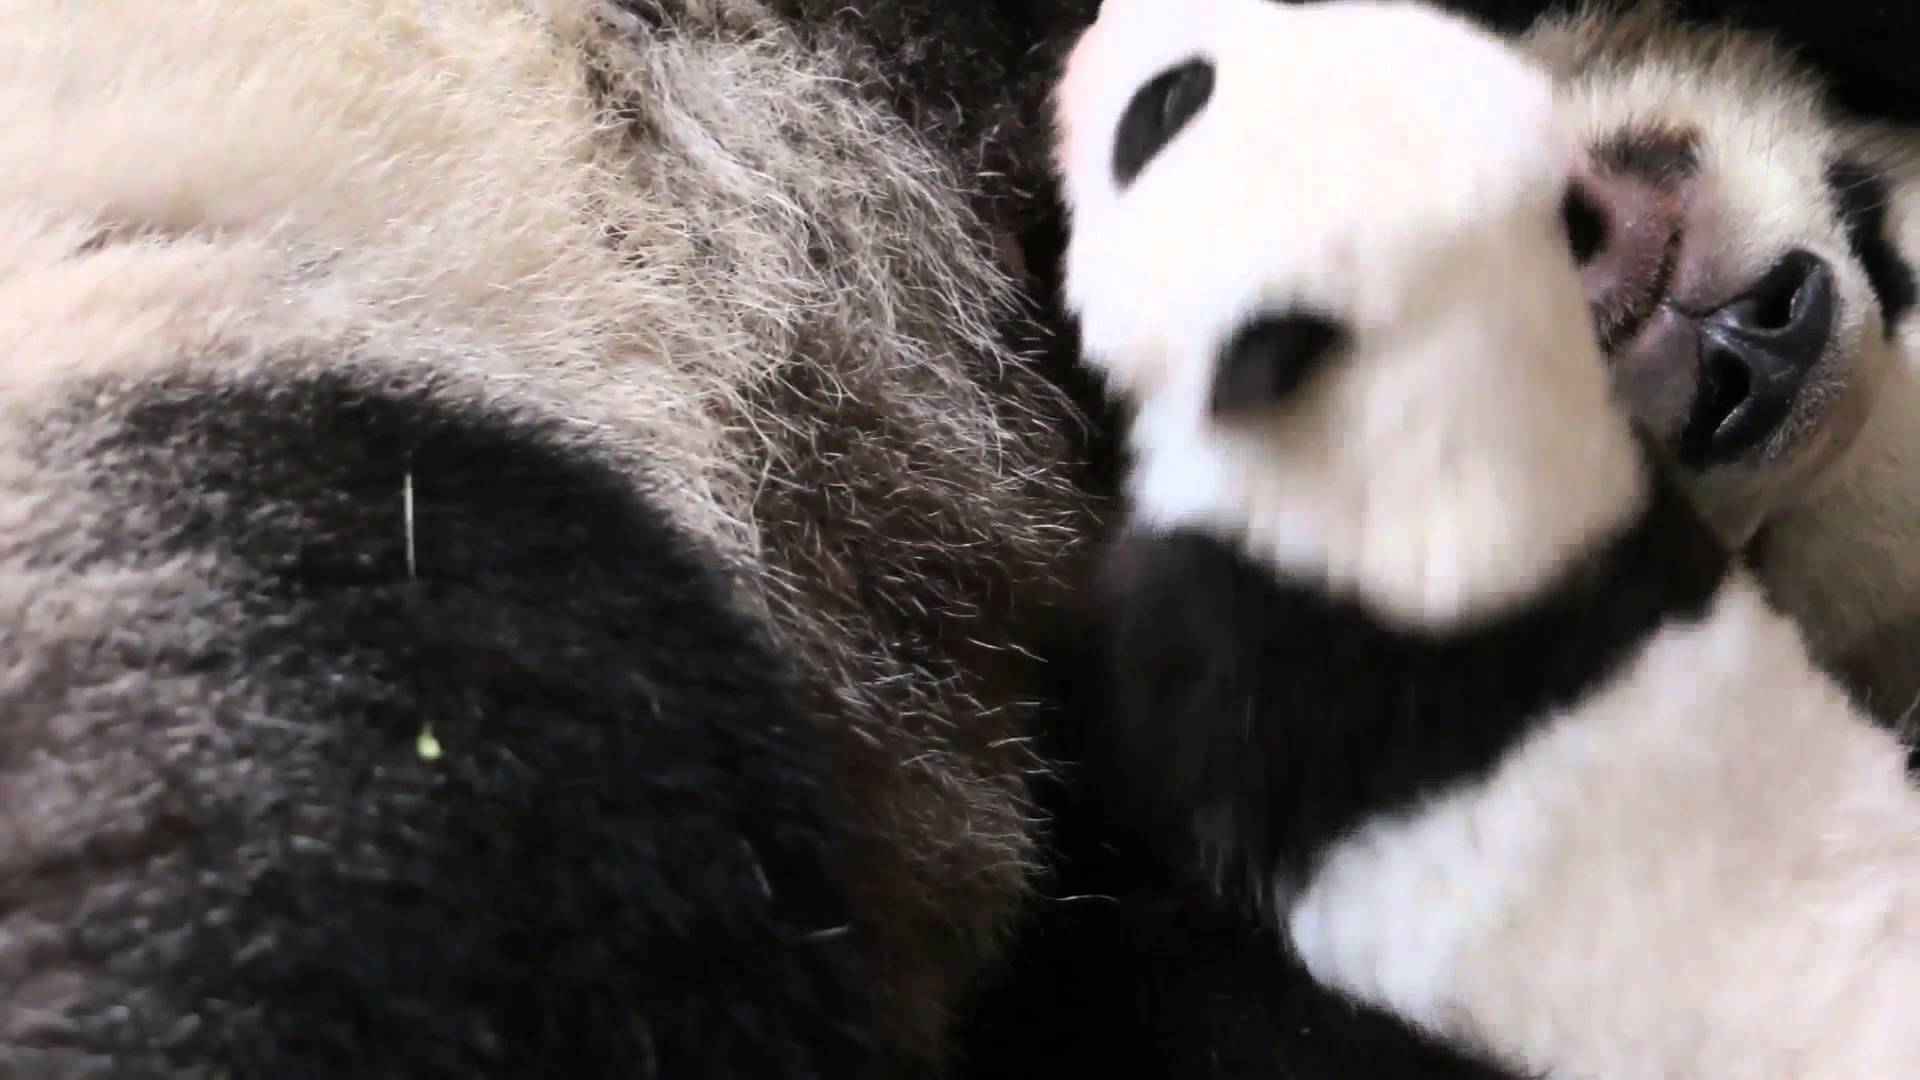 Toronto Zoo Giant Panda Cub at 10 Weeks Old - YouTube